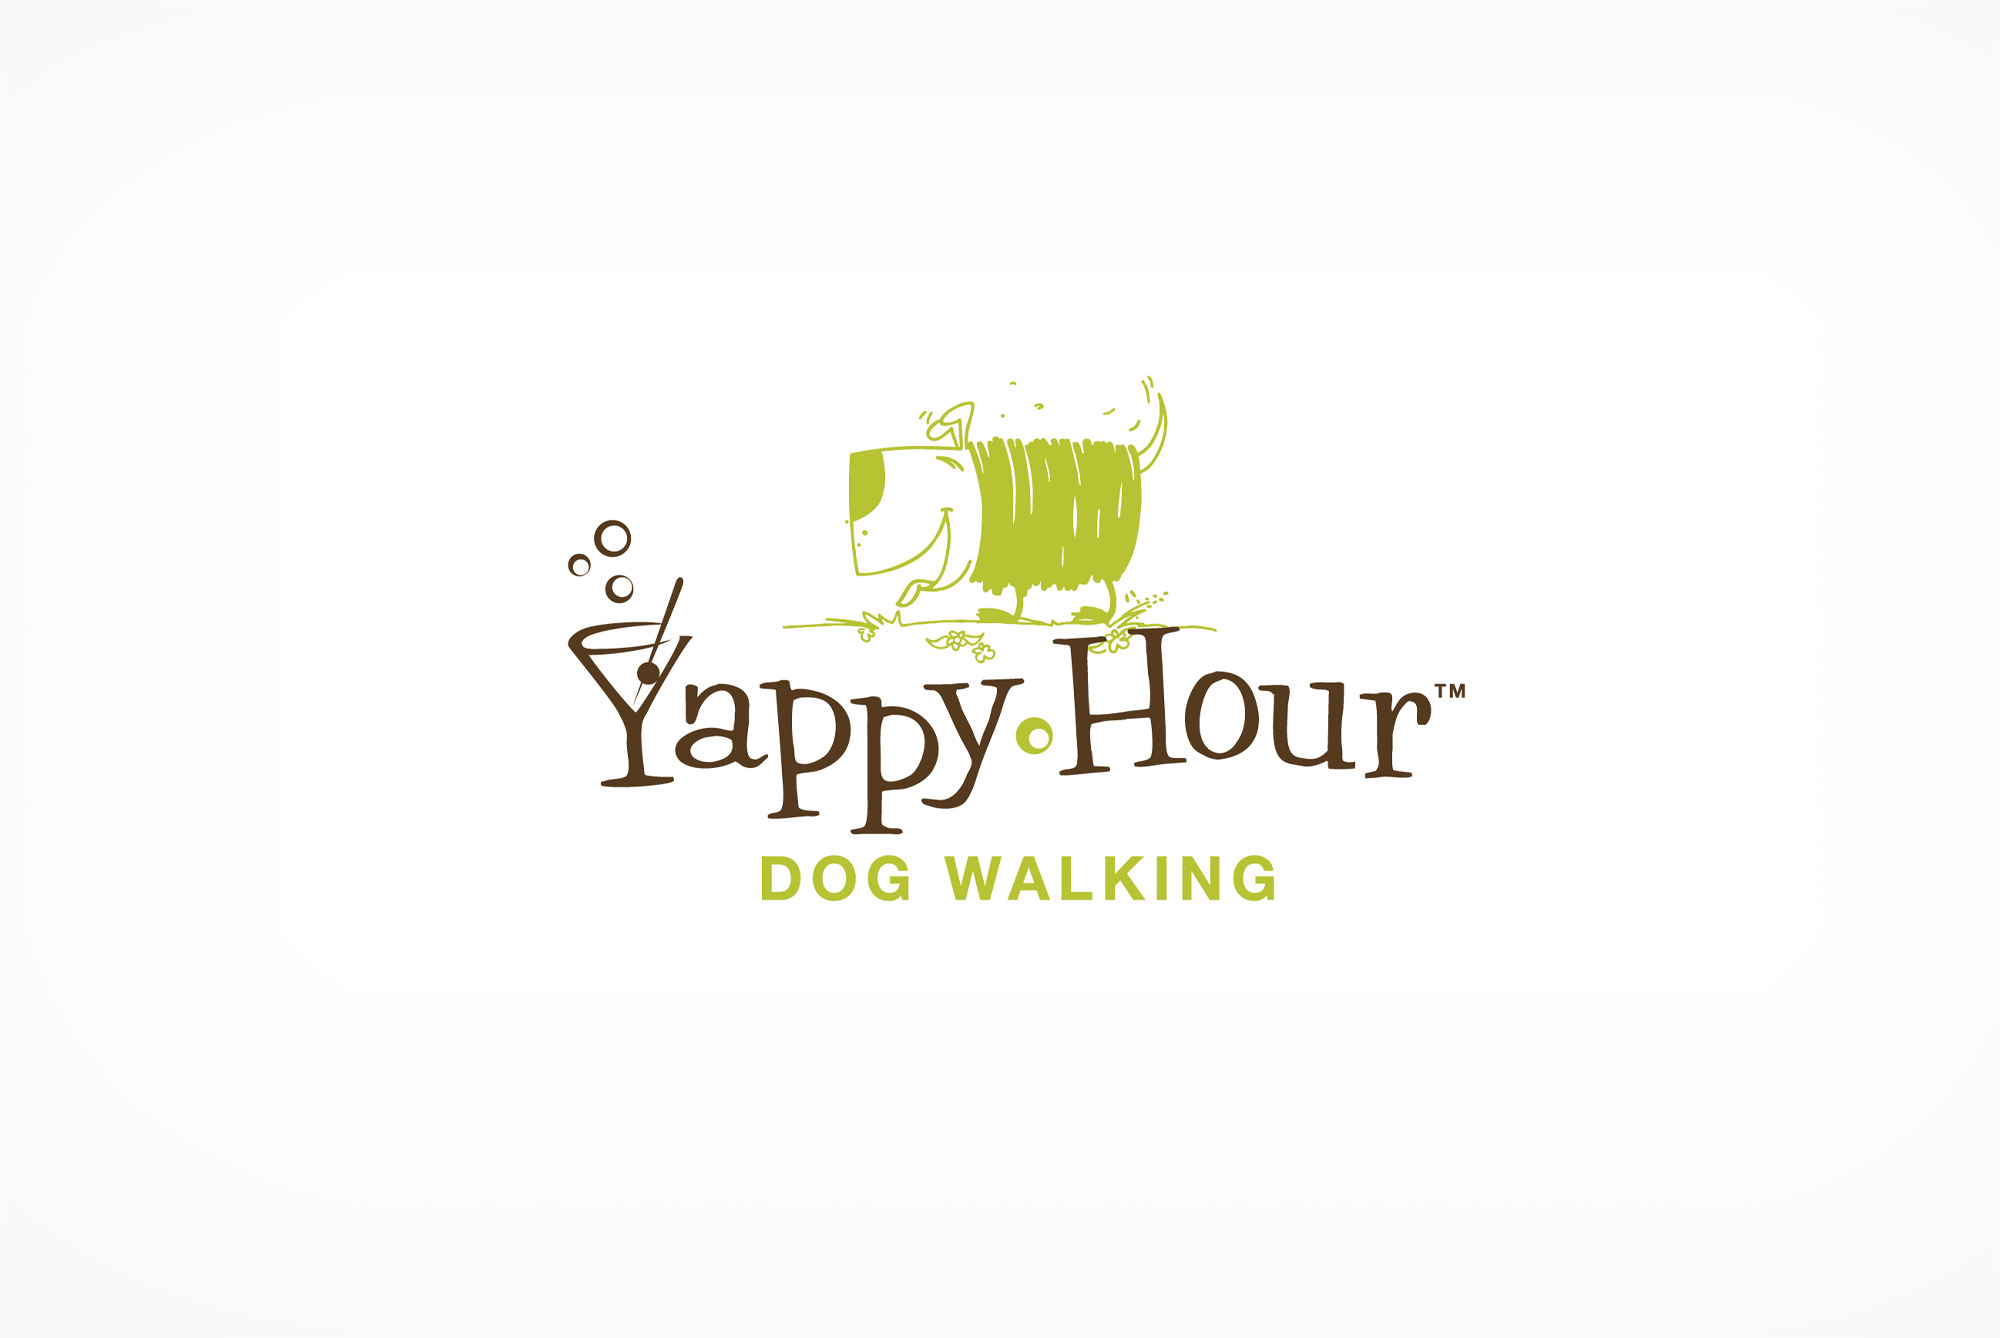 Yappy Hour Dog Walking logo.